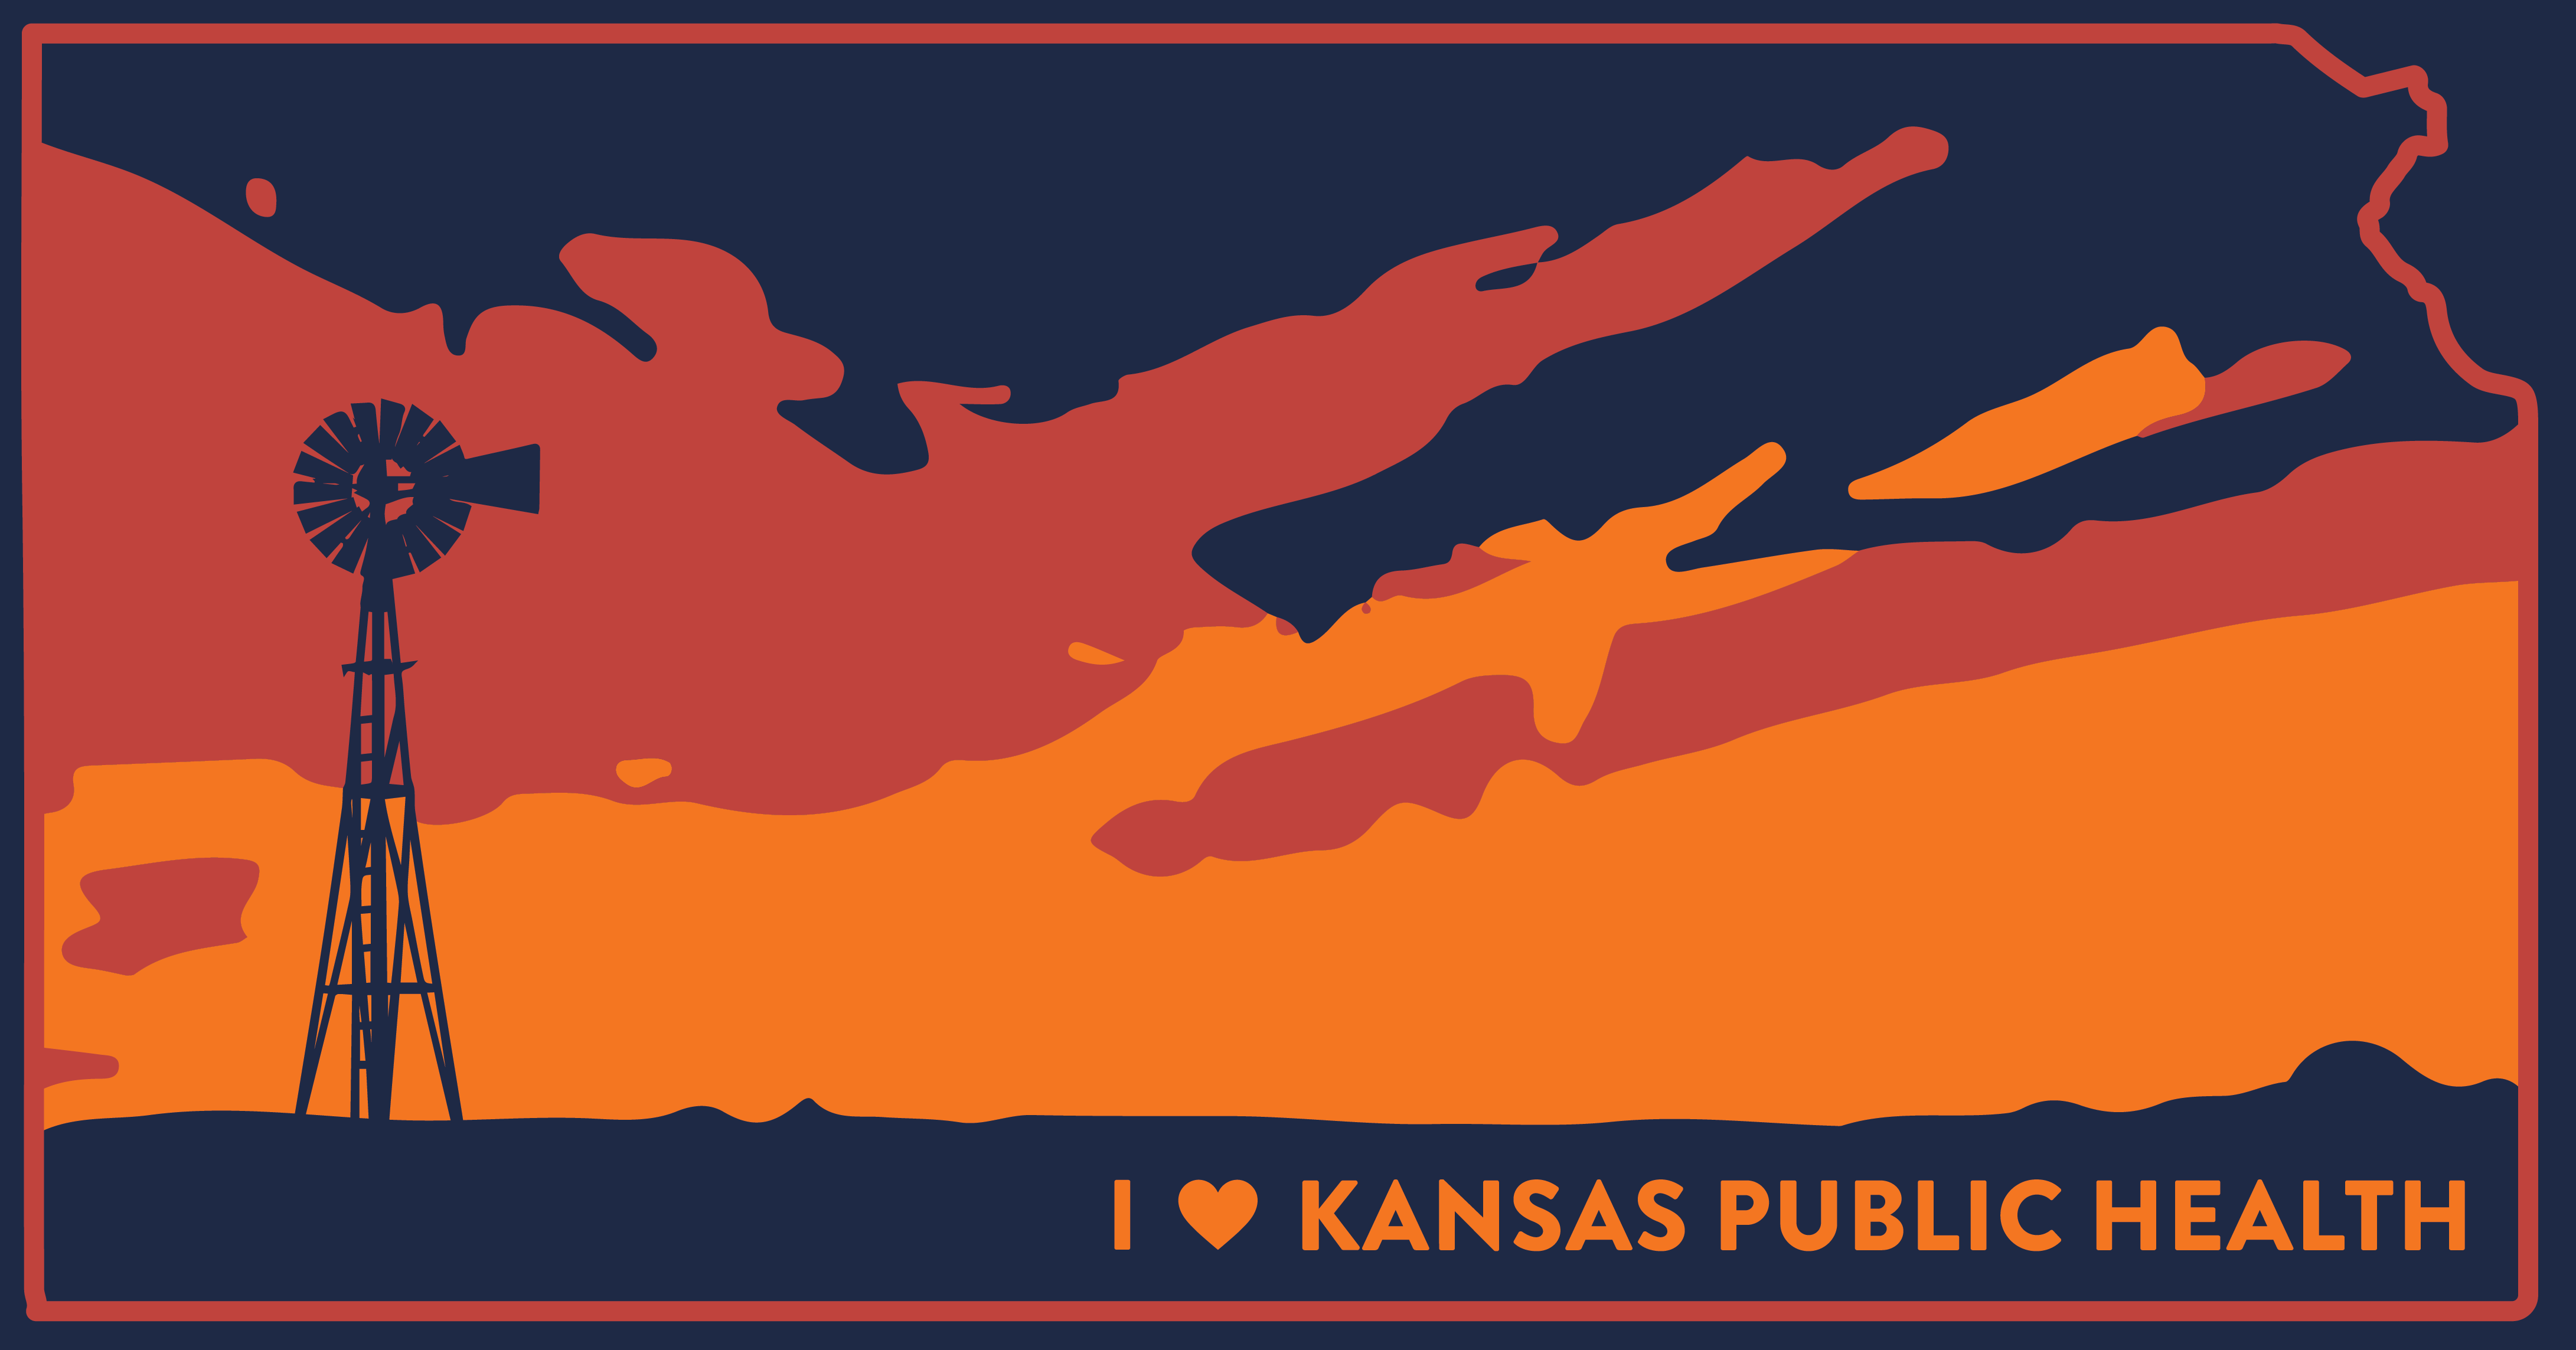 Kansas loves public health logo